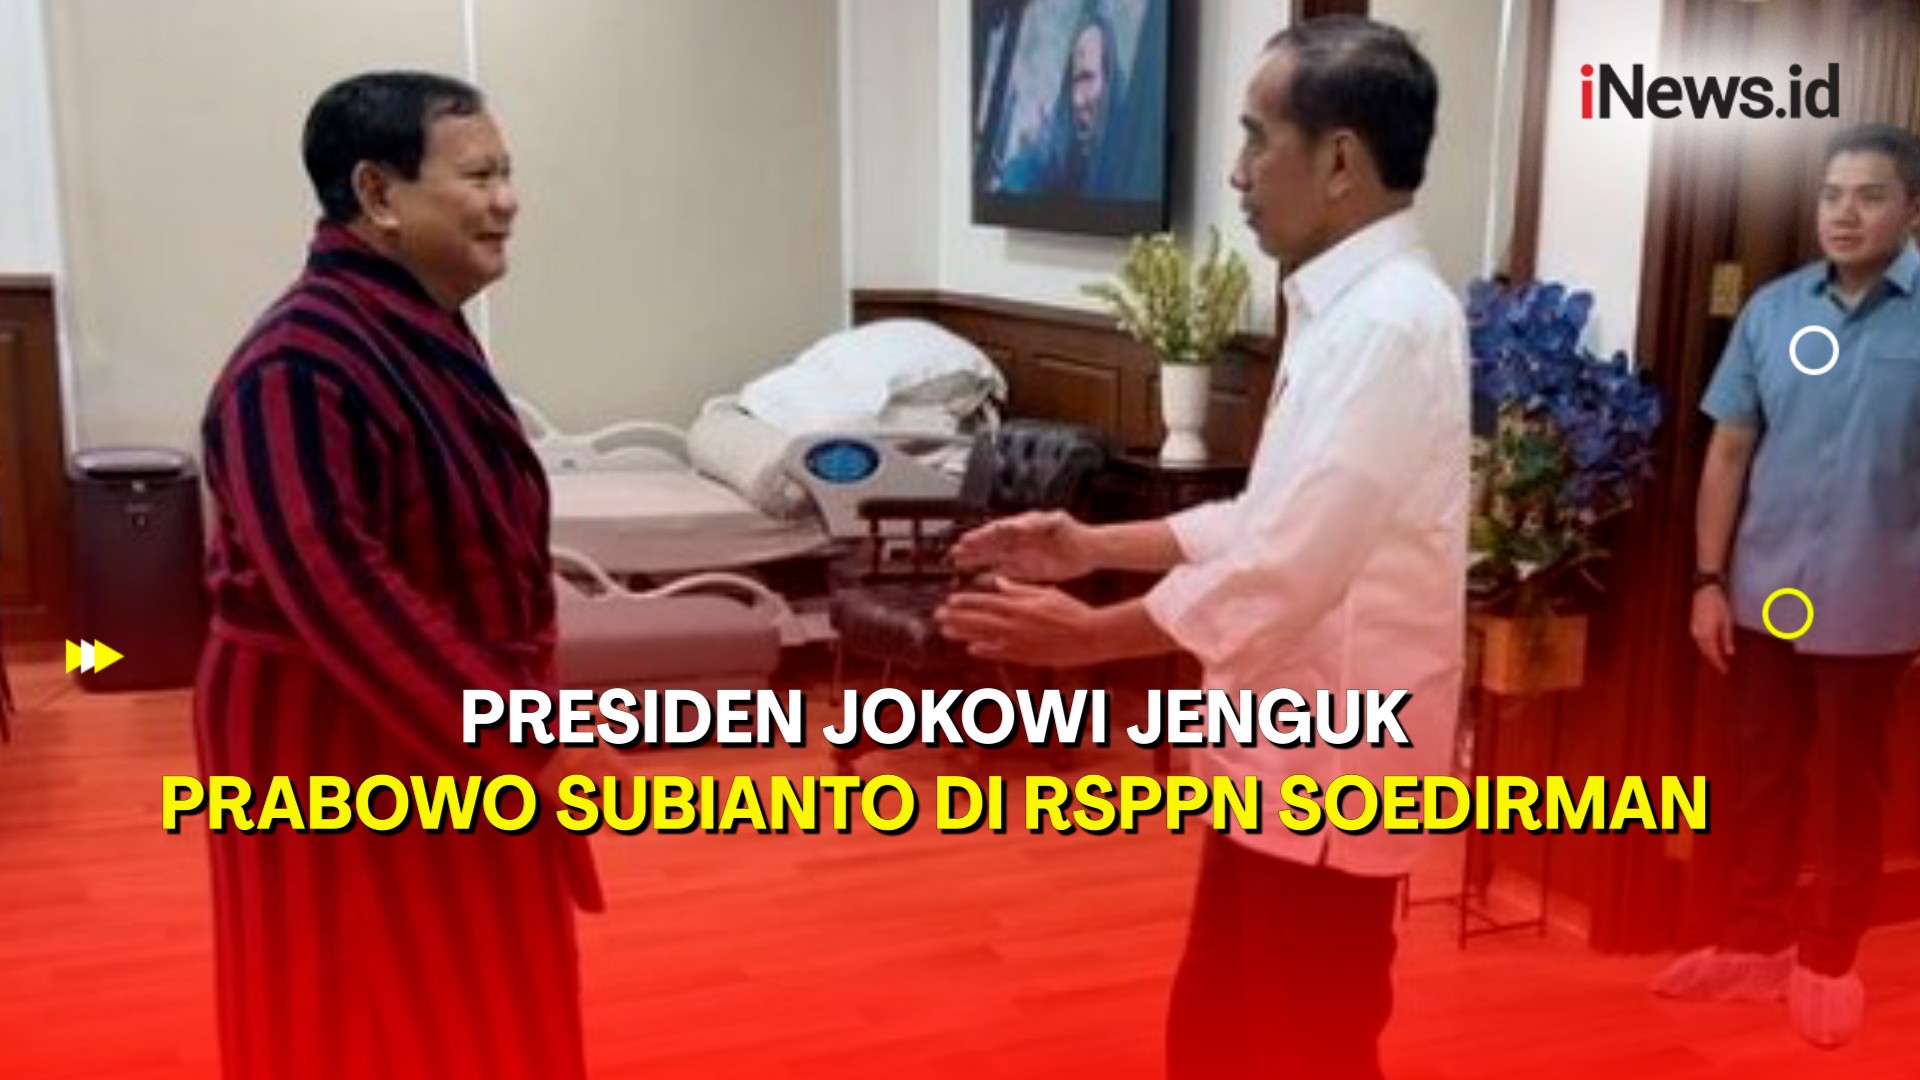 Momen Presiden Jokowi Jenguk Prabowo Seusai Operasi Kaki Kiri di RSPPN Soedirman